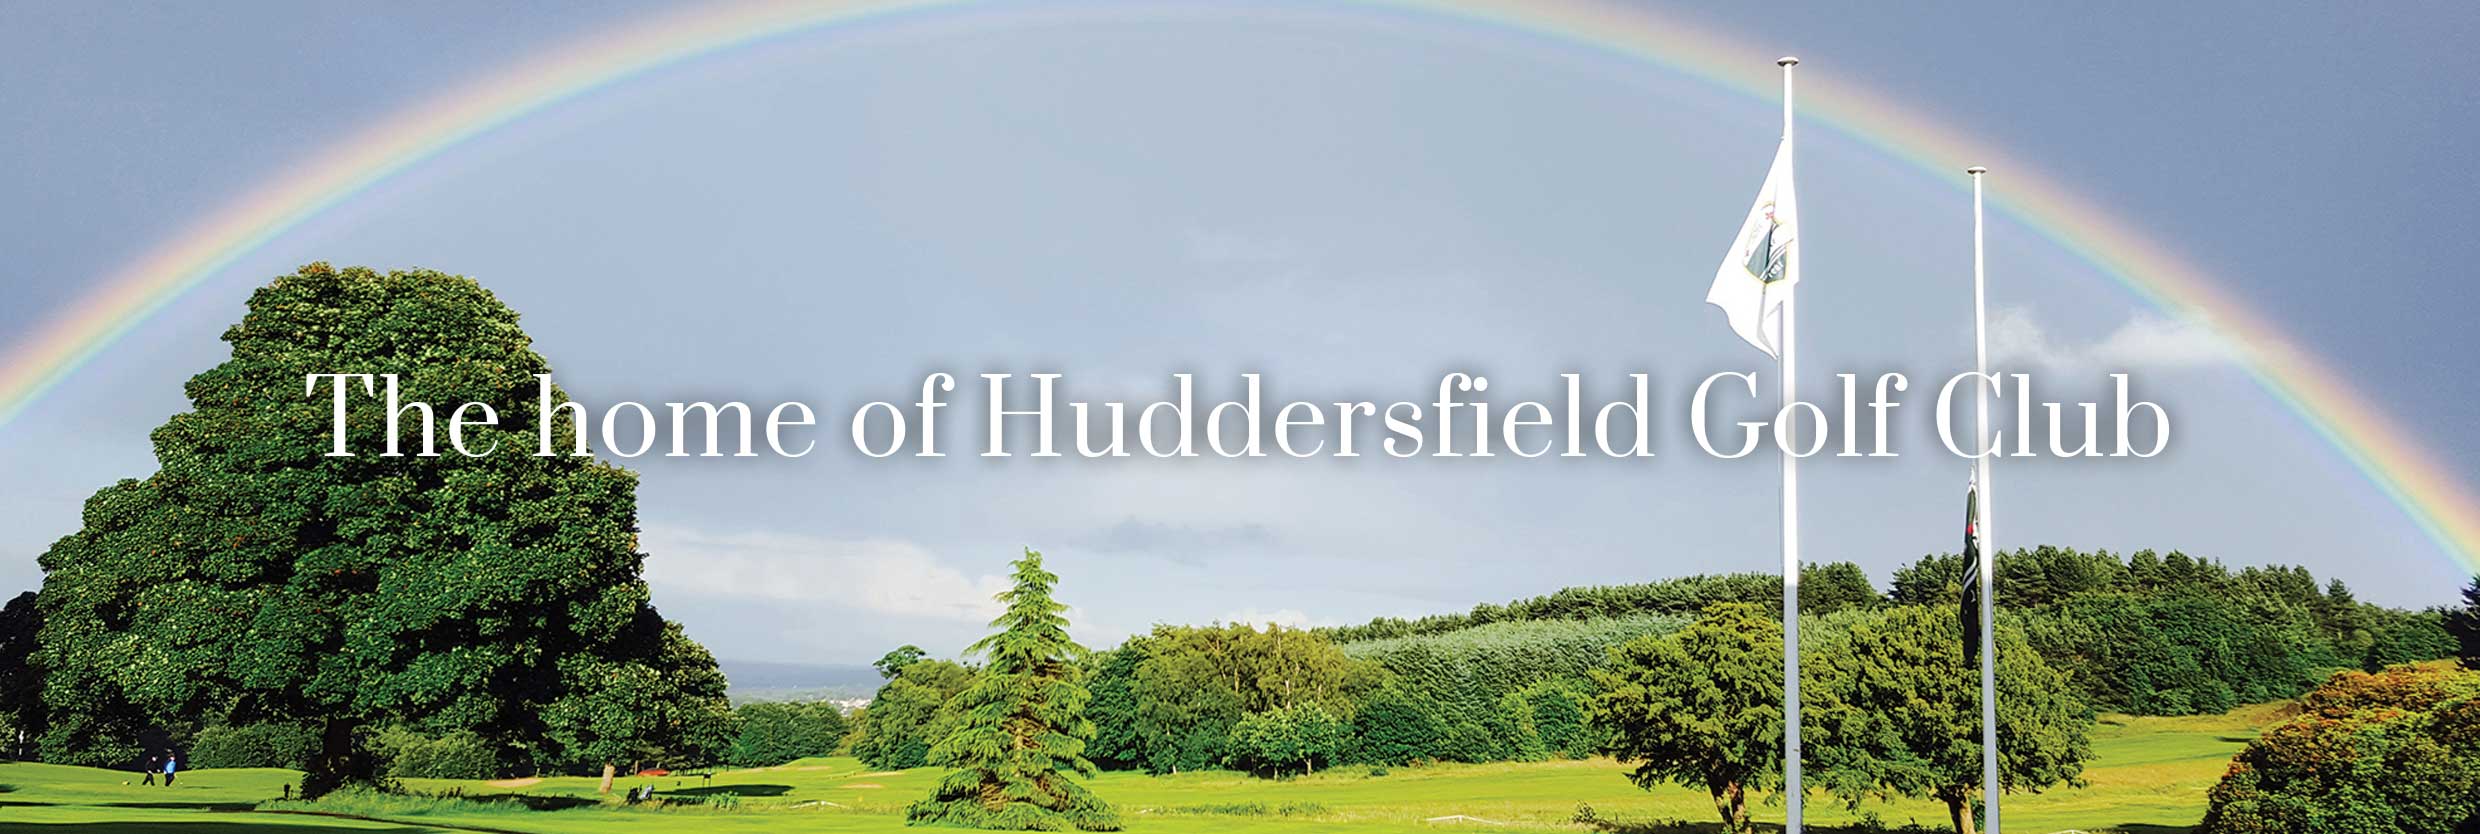 The home of Huddersfield Golf Club